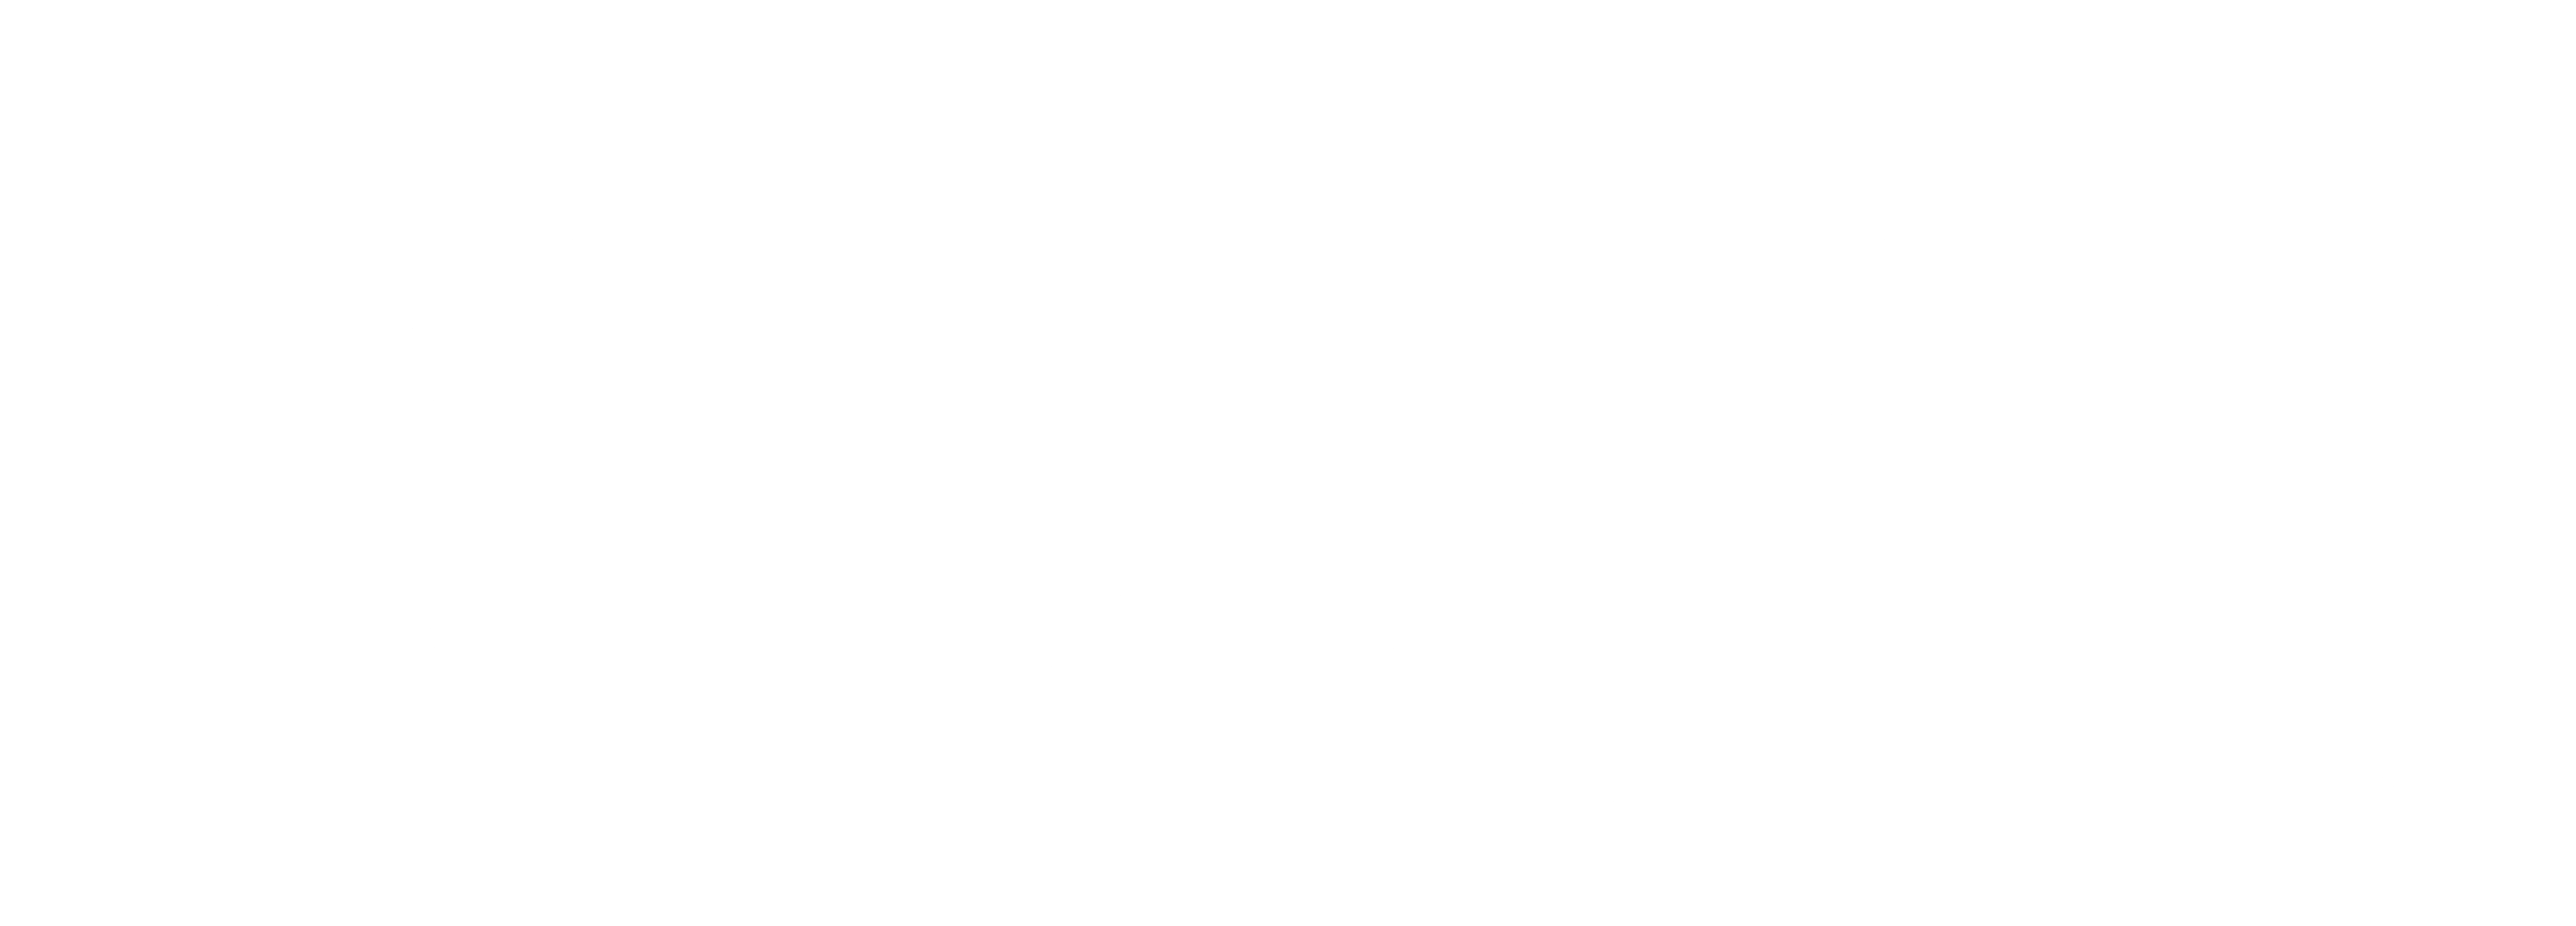 Sweet William's Wand of Wonder Logo